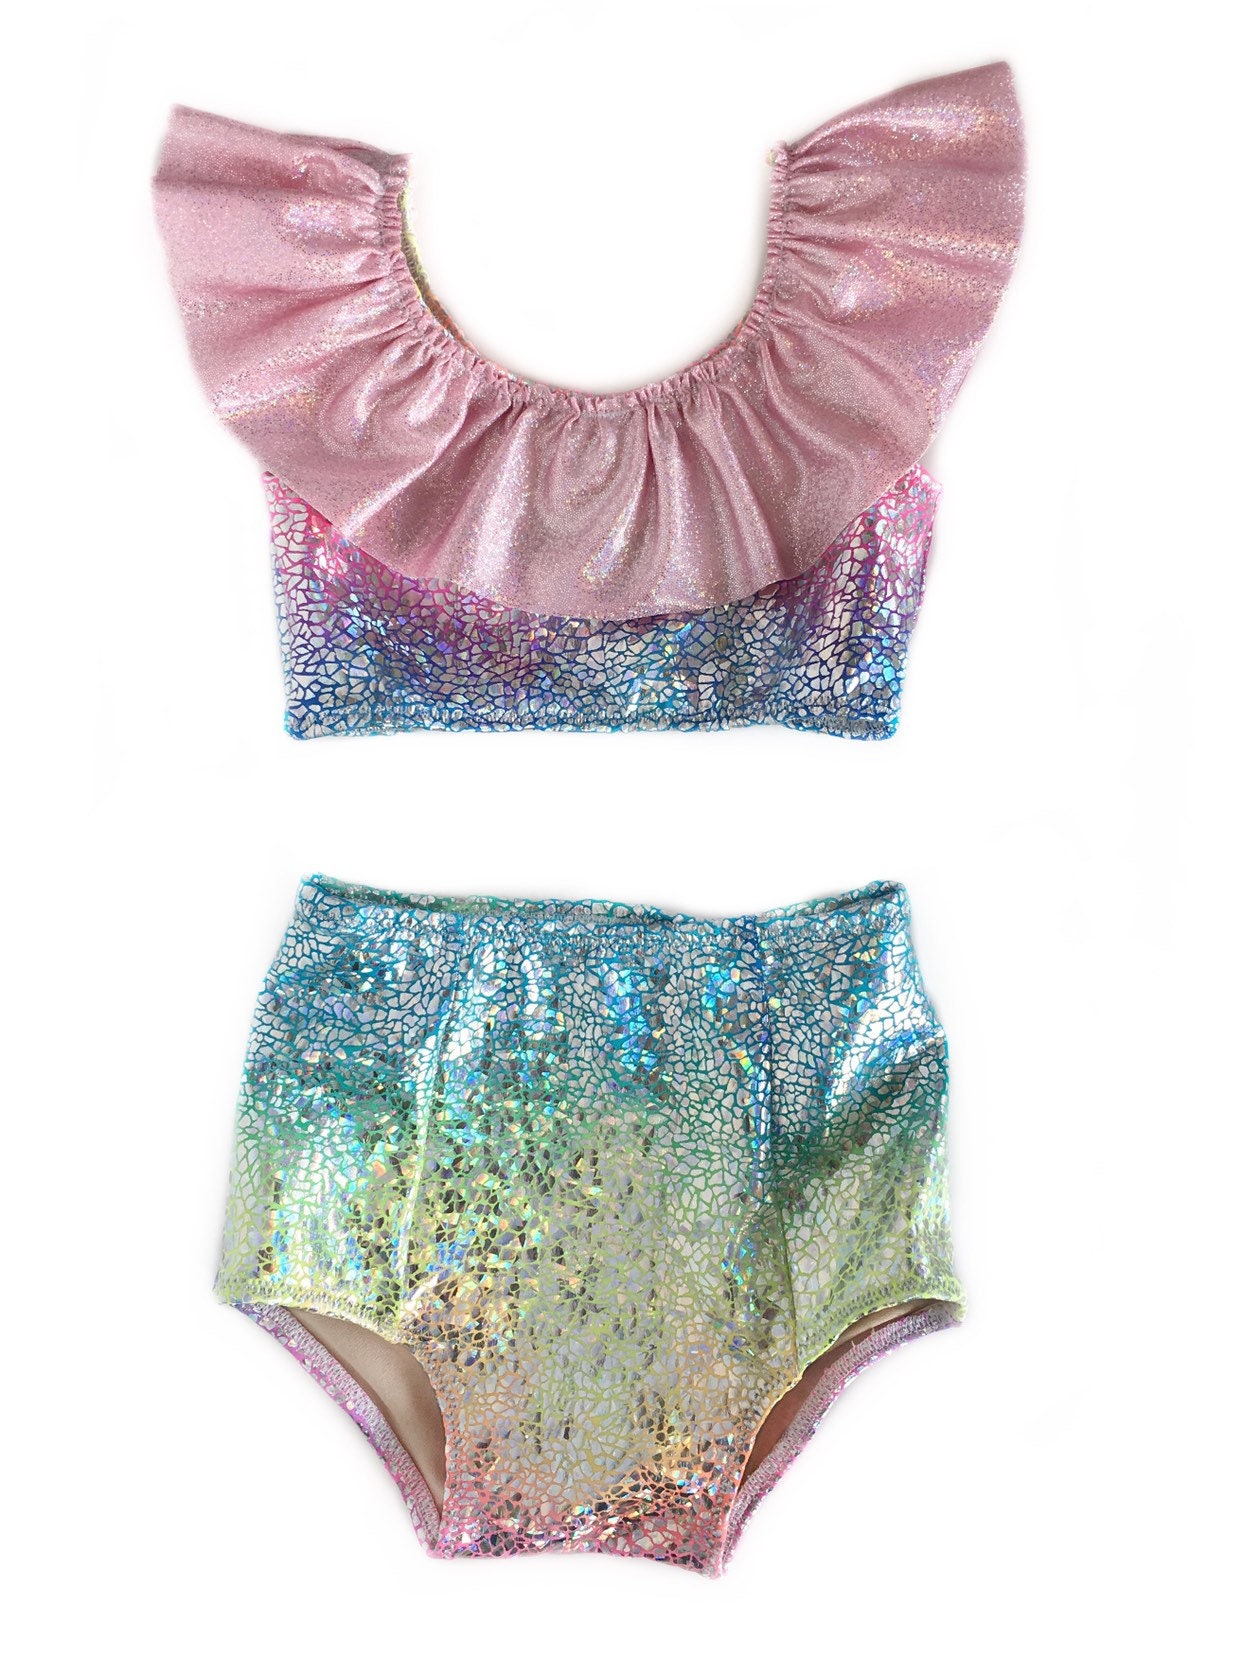 Unicorn Swim suit high waisted bikini ruffle swimsuit baby | Etsy